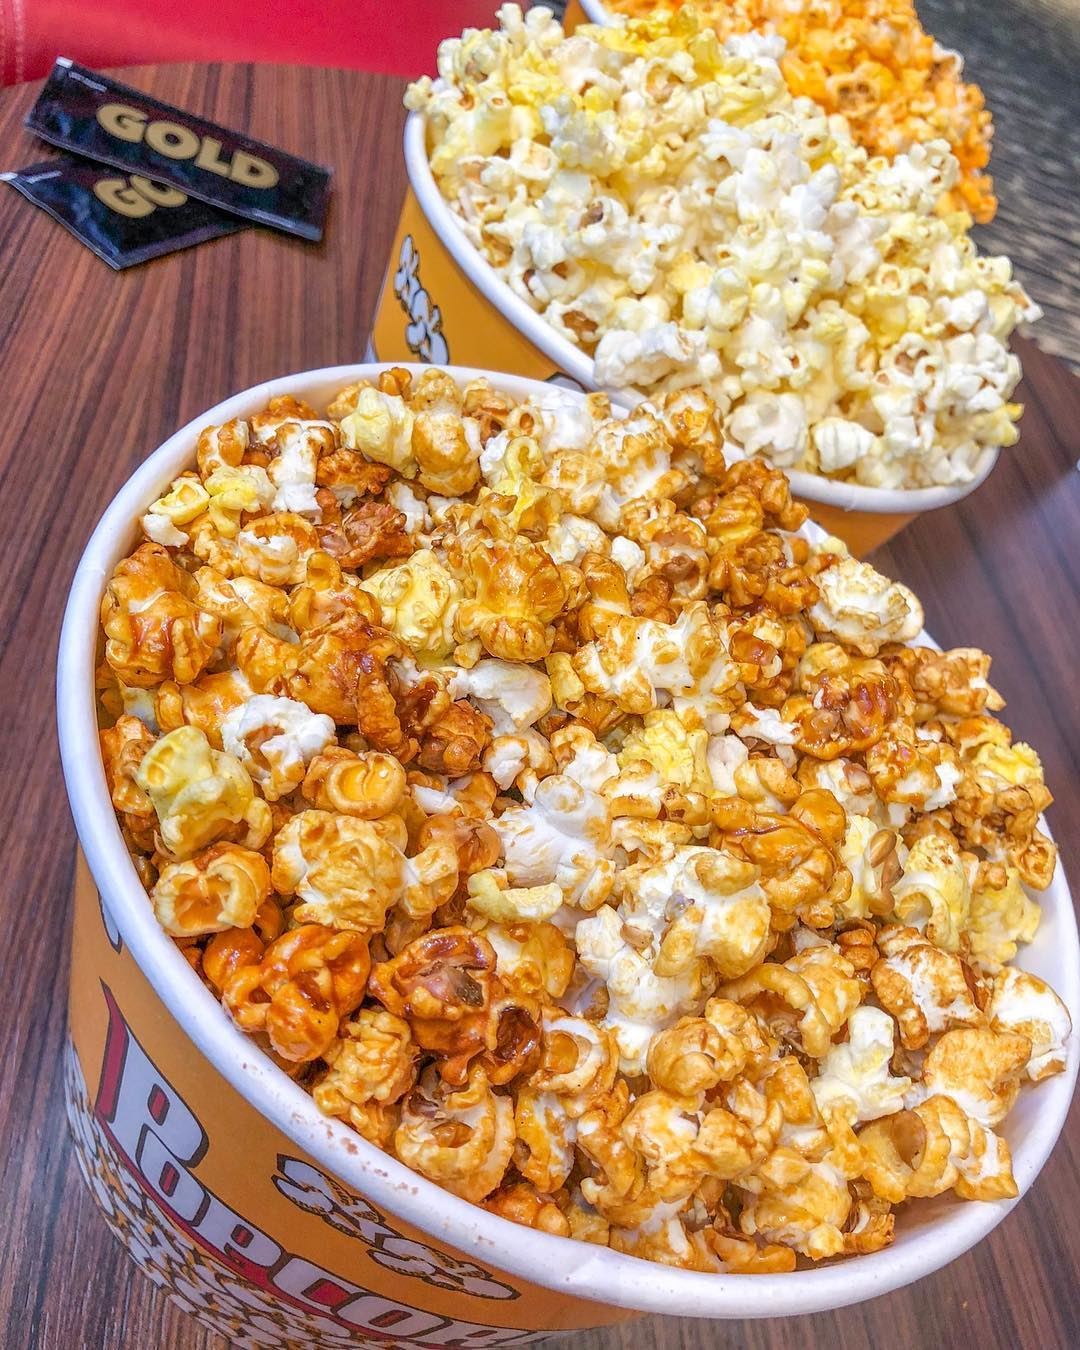 Flavors of Popcorn at VOX Cinemas Lebanon